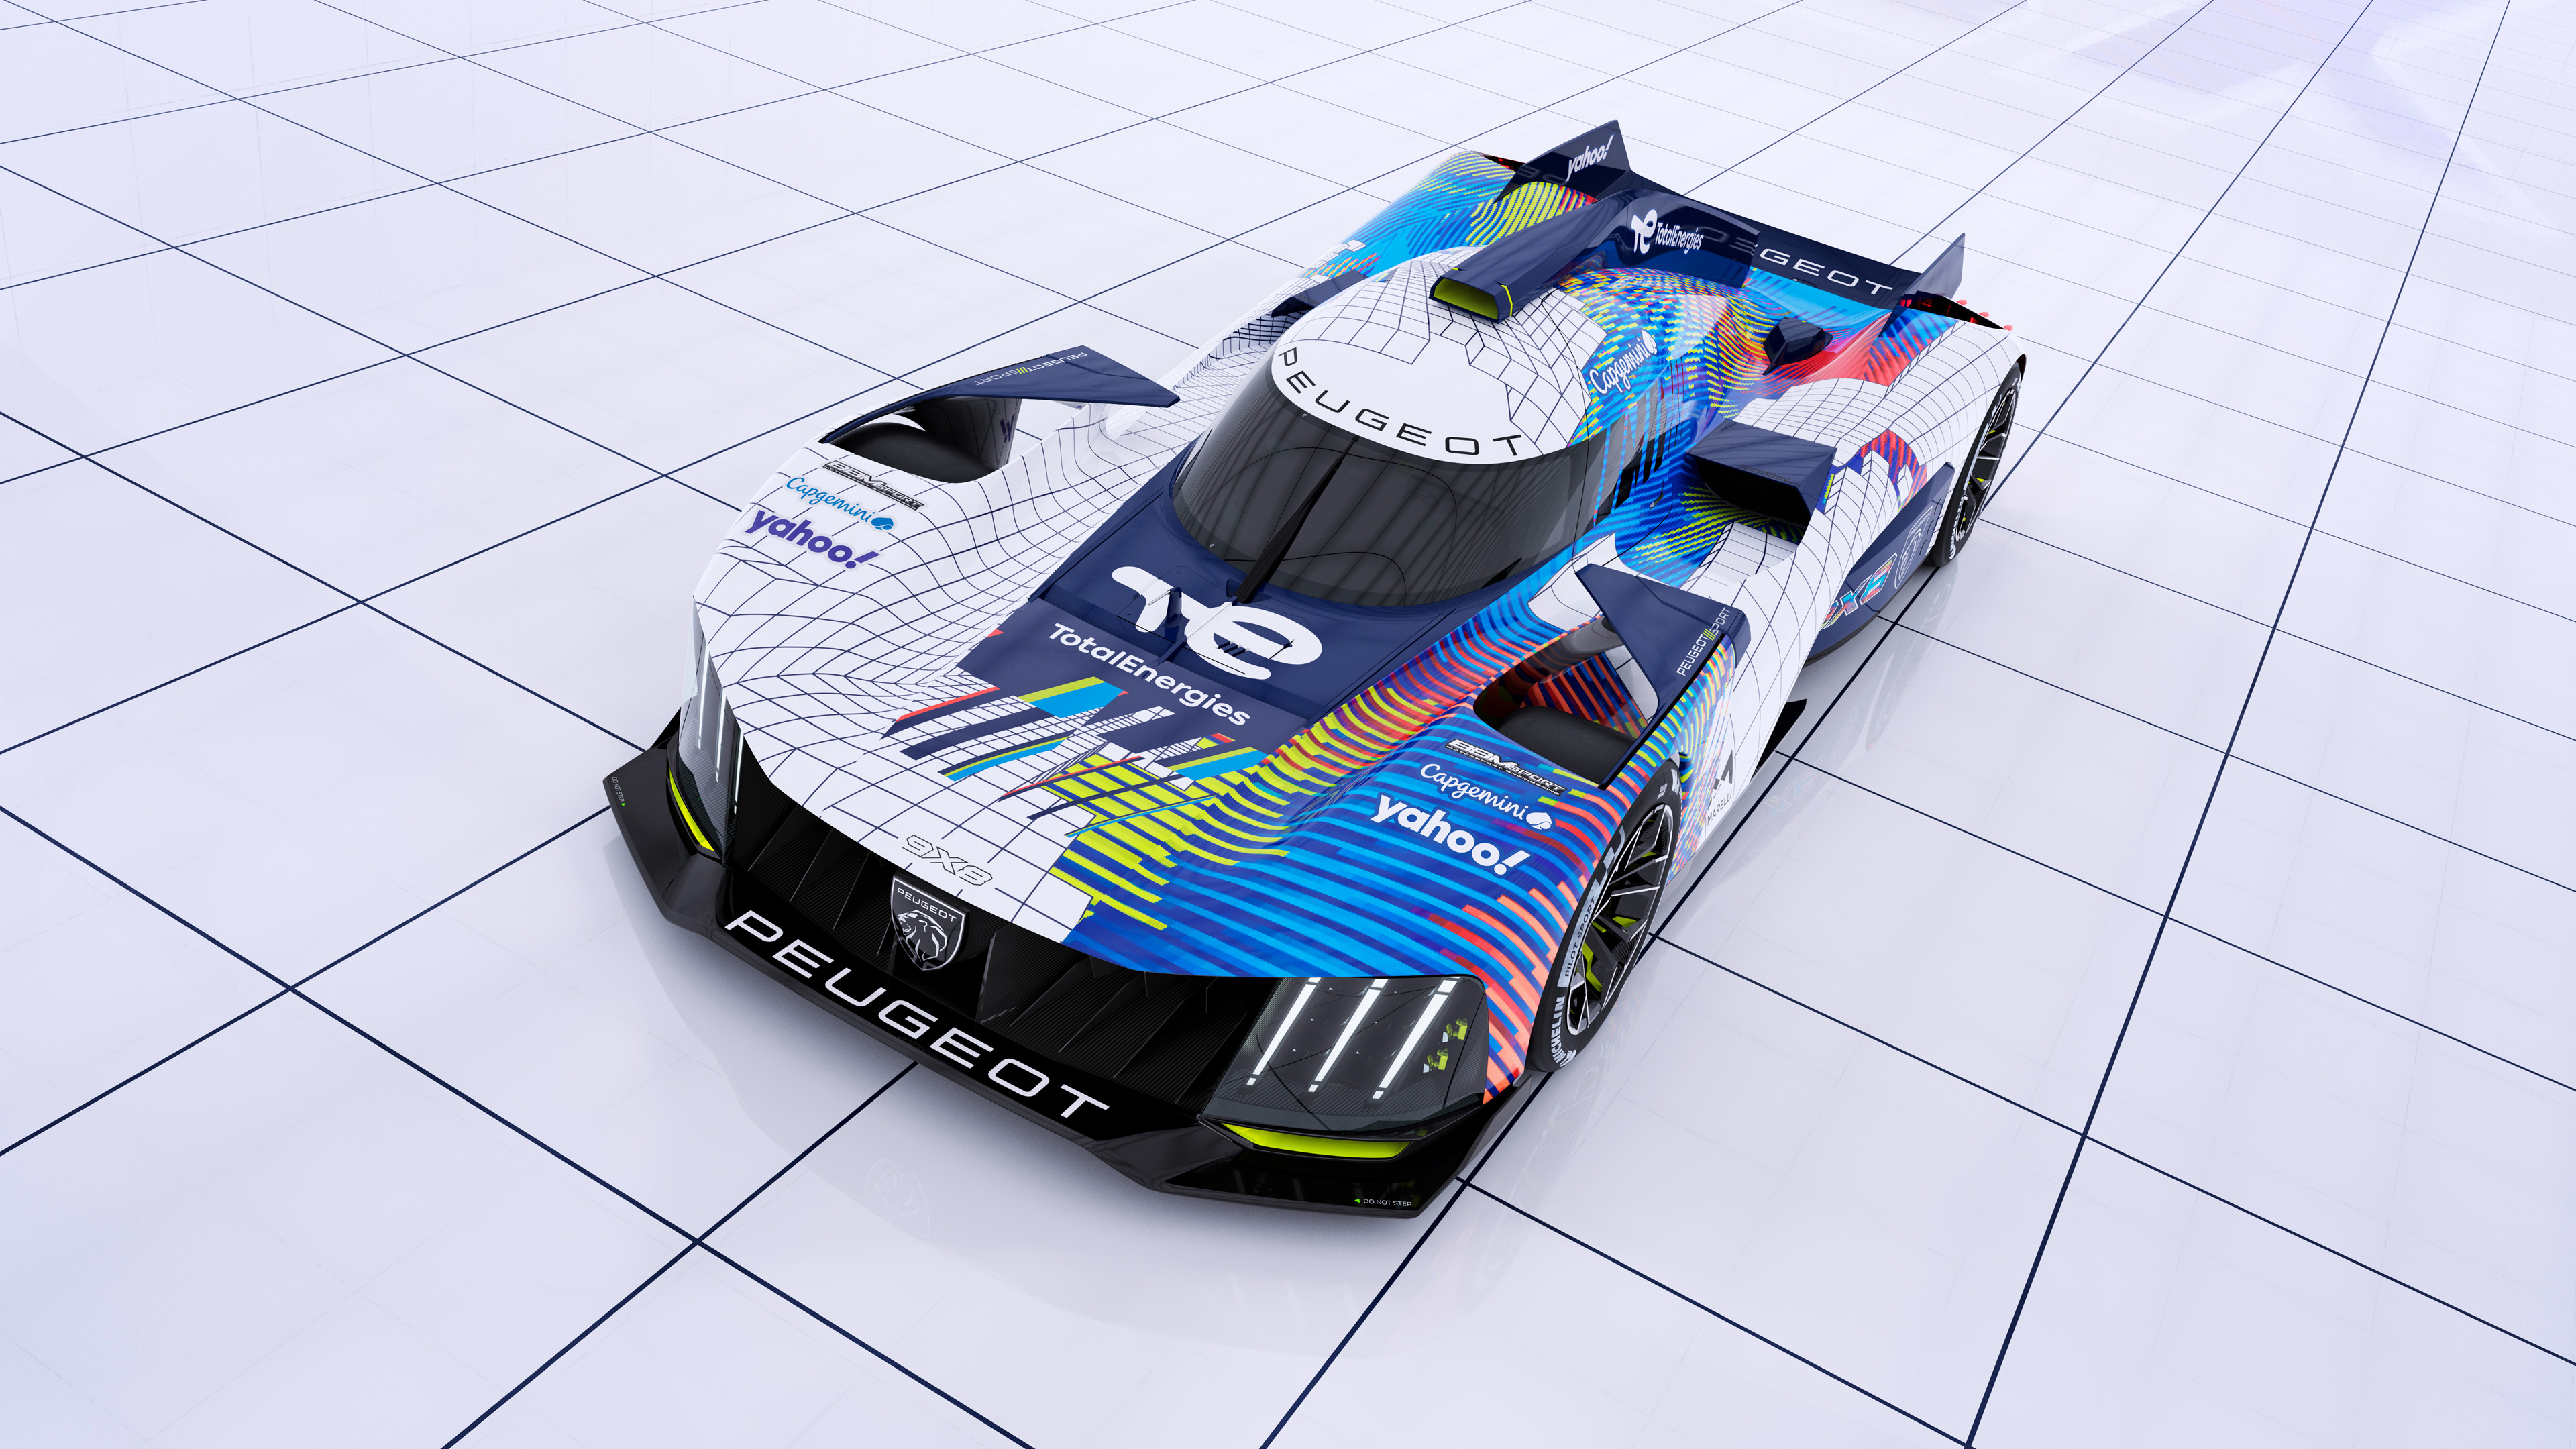 Peugeot X Le Mans Hypercar Uhd K Wallpaper Pixelz Cc